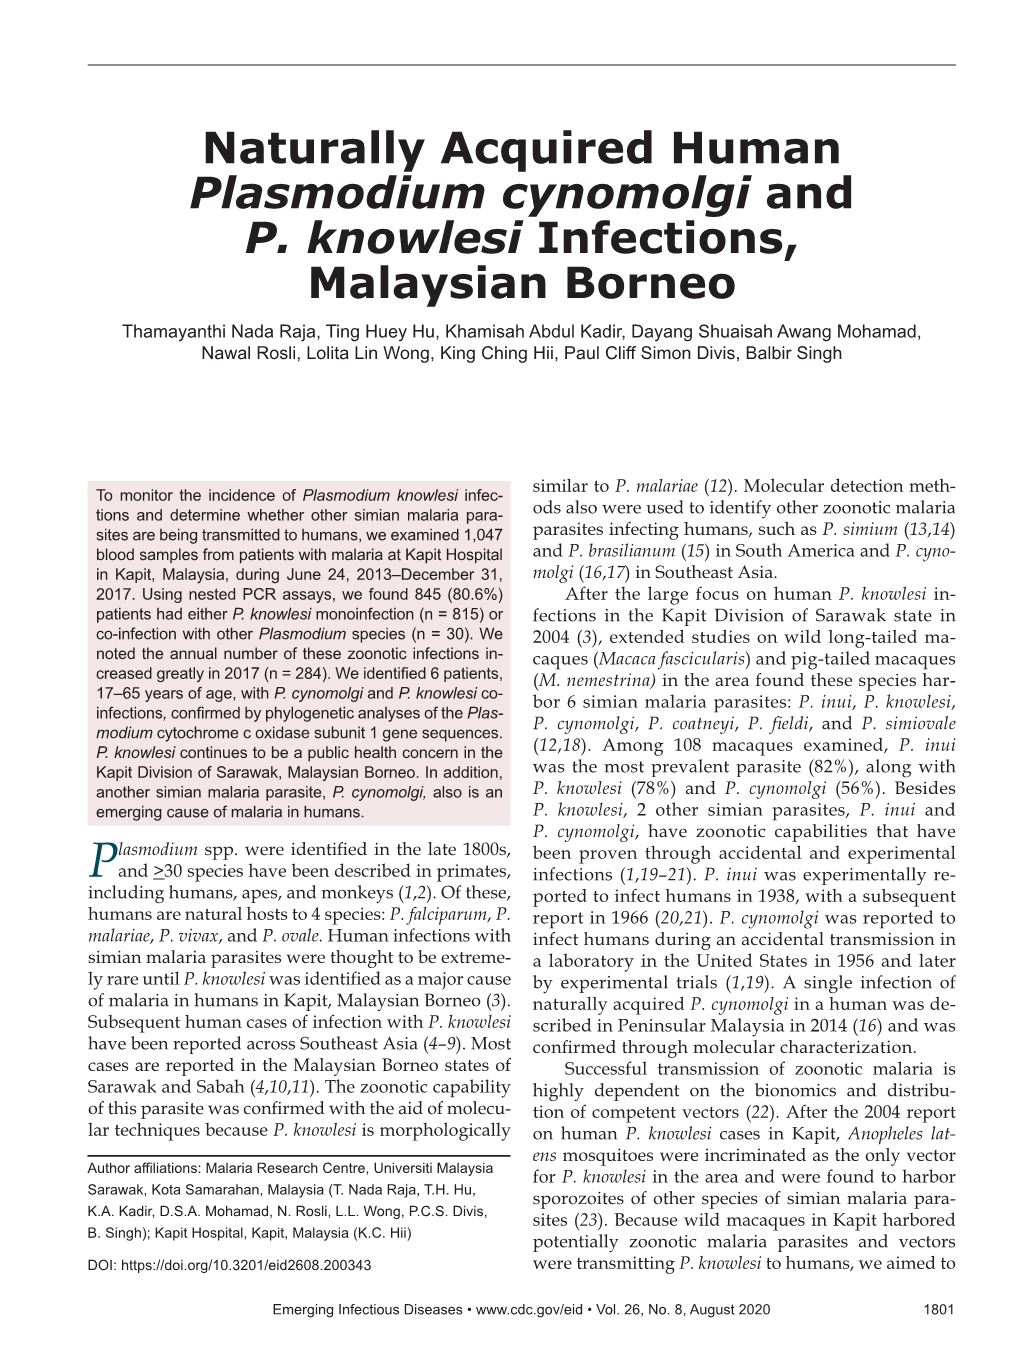 Naturally Acquired Human Plasmodium Cynomolgi and P